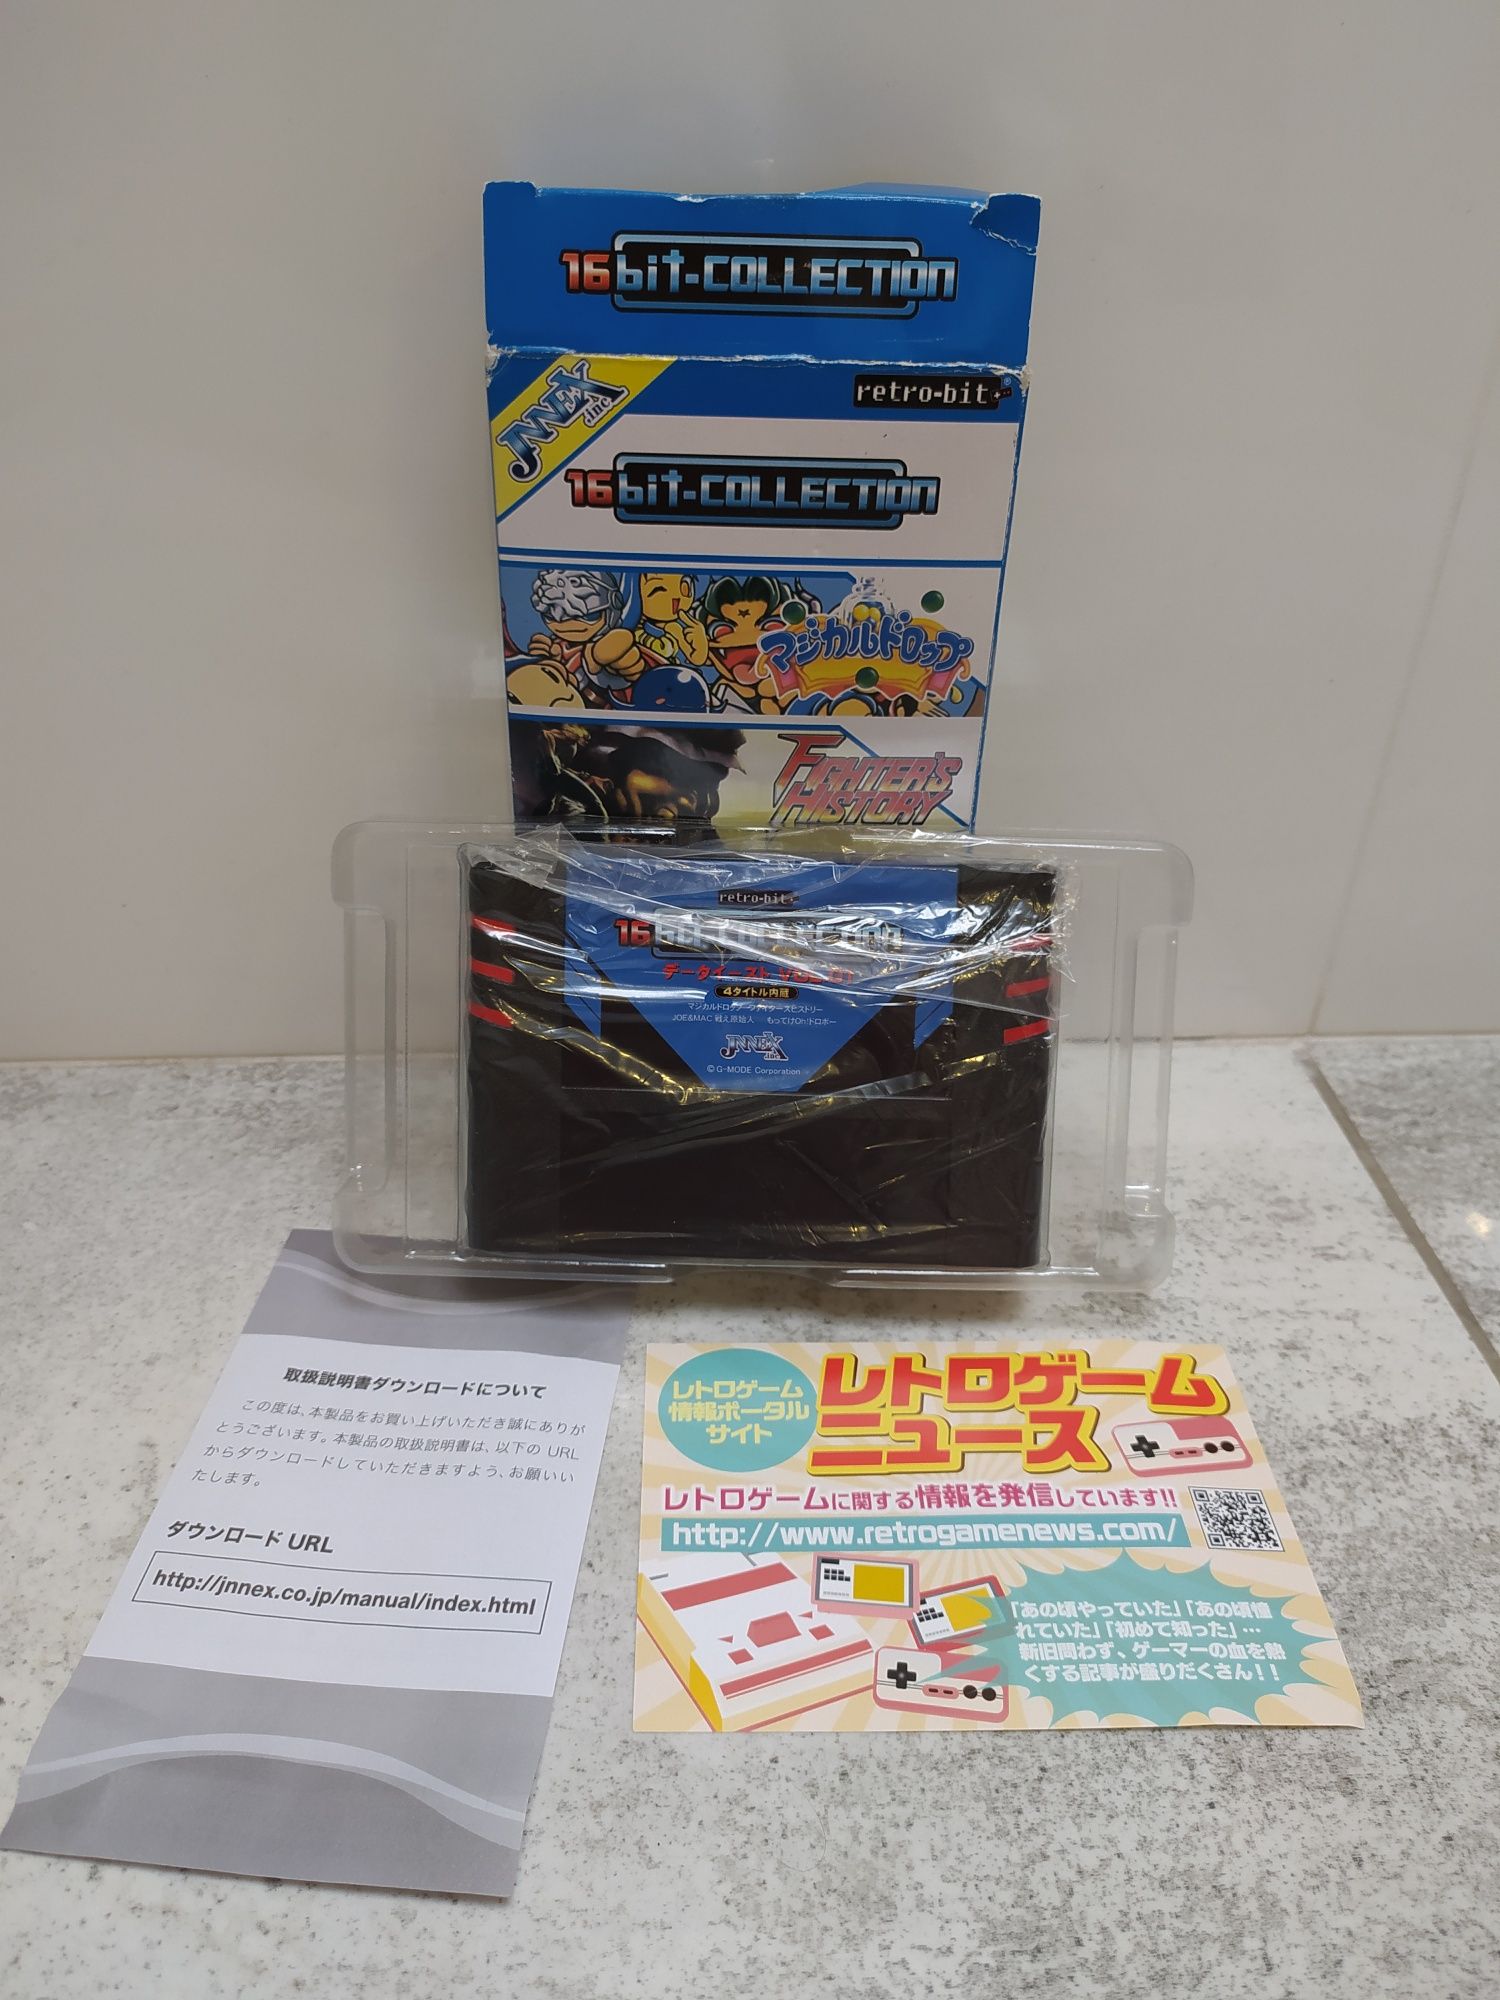 SNES Super Nintendo Famicom Skladanka retro bit Vol 01